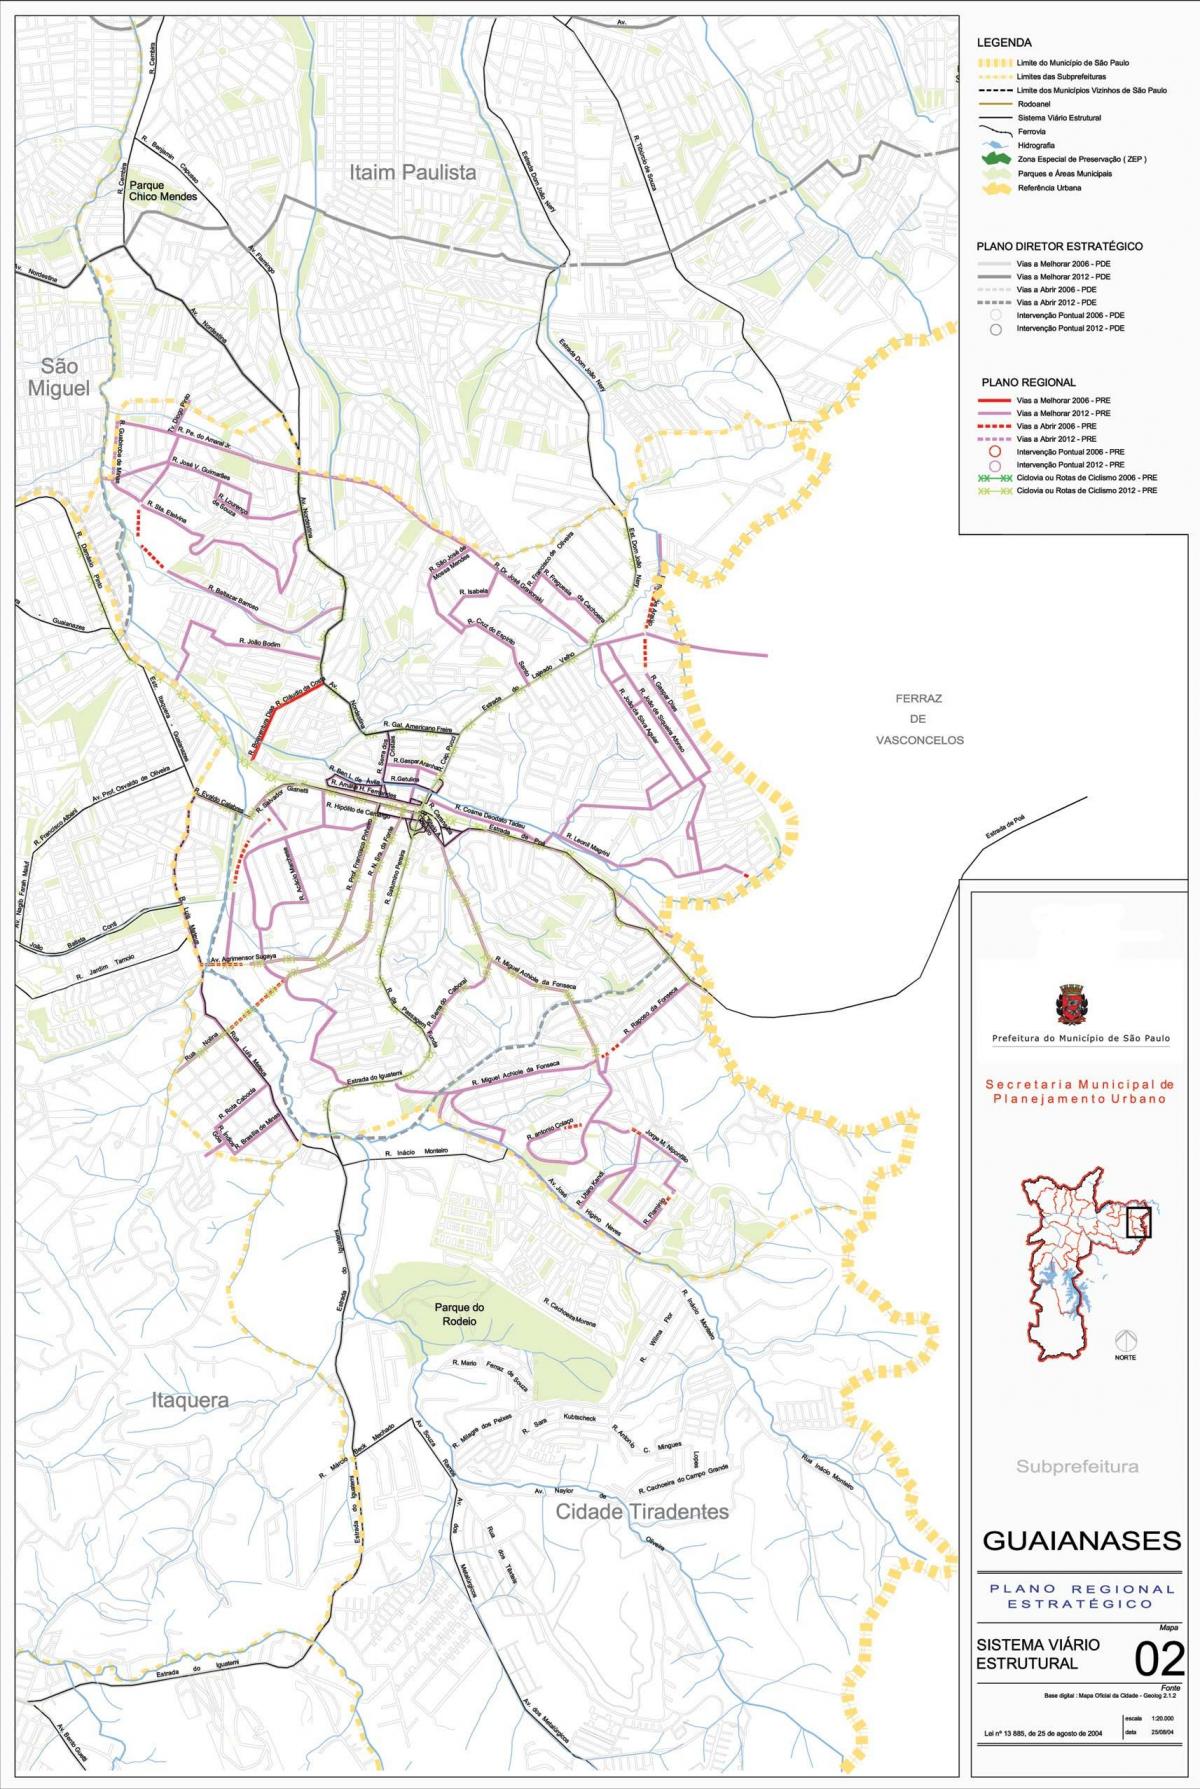 Mapa de Guaianases São Paulo - Estradas